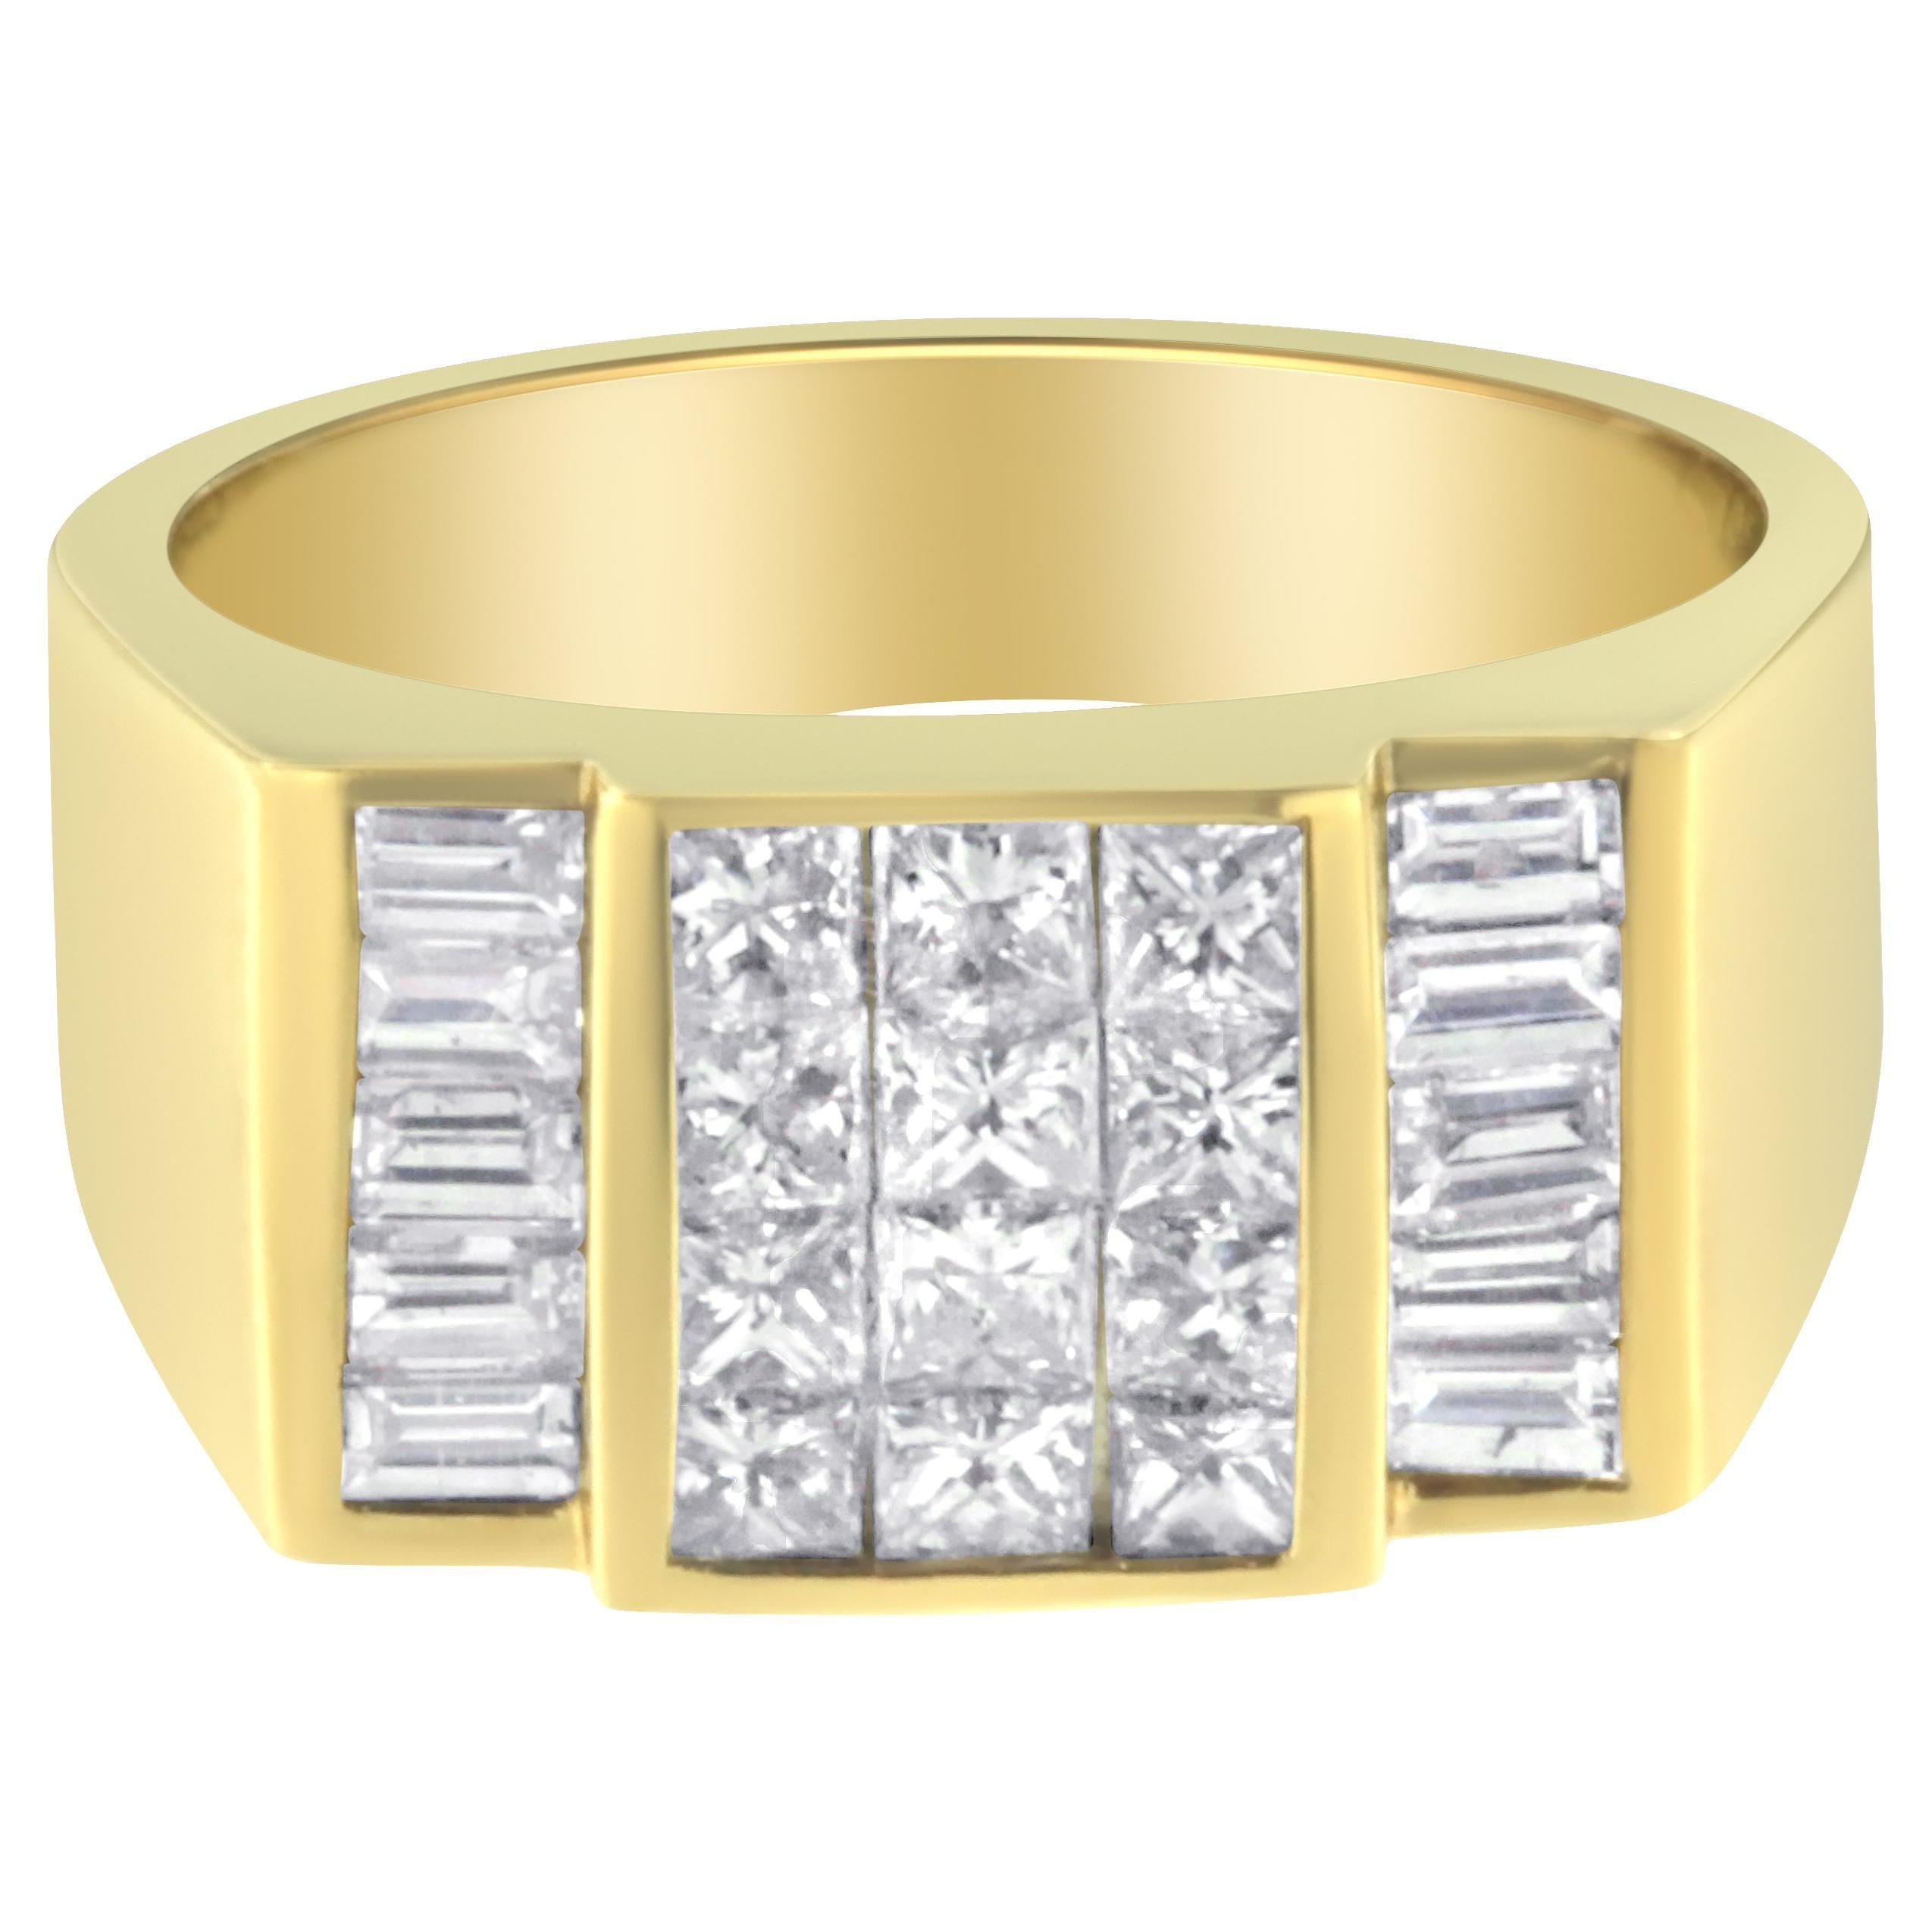 14k Yellow Gold 2 1/5 Carat Diamond Ring